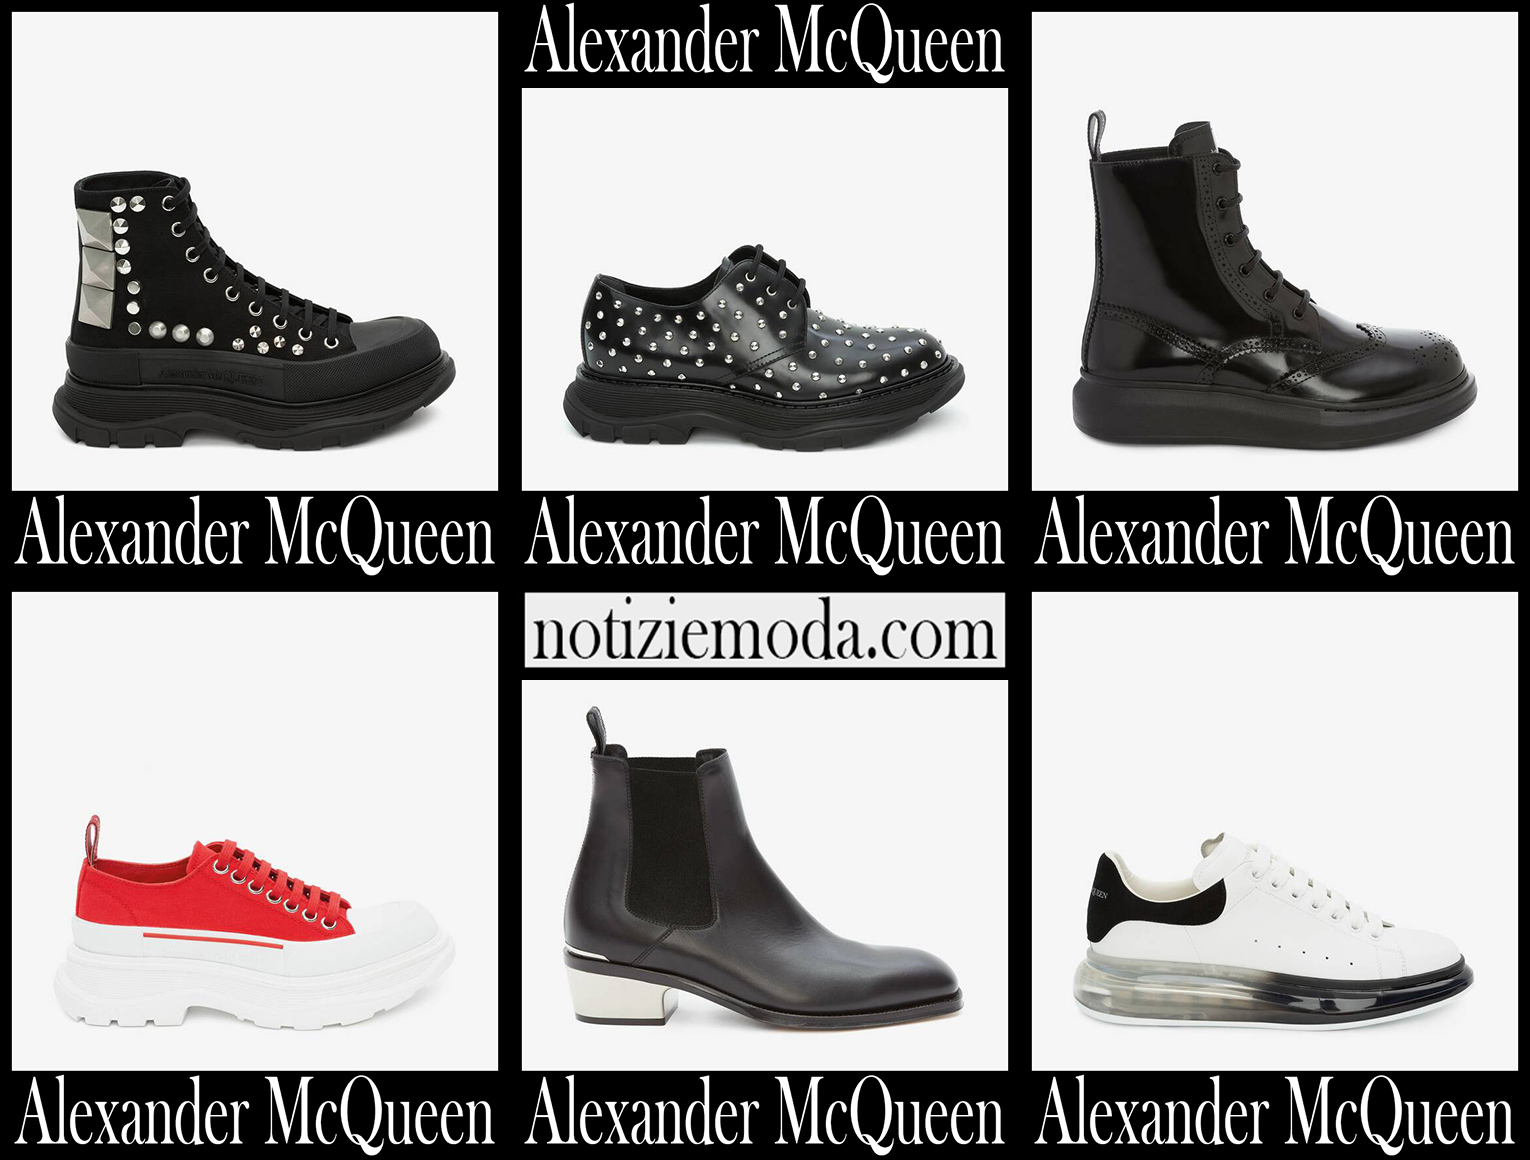 Nuovi arrivi scarpe Alexander McQueen 2021 calzature uomo